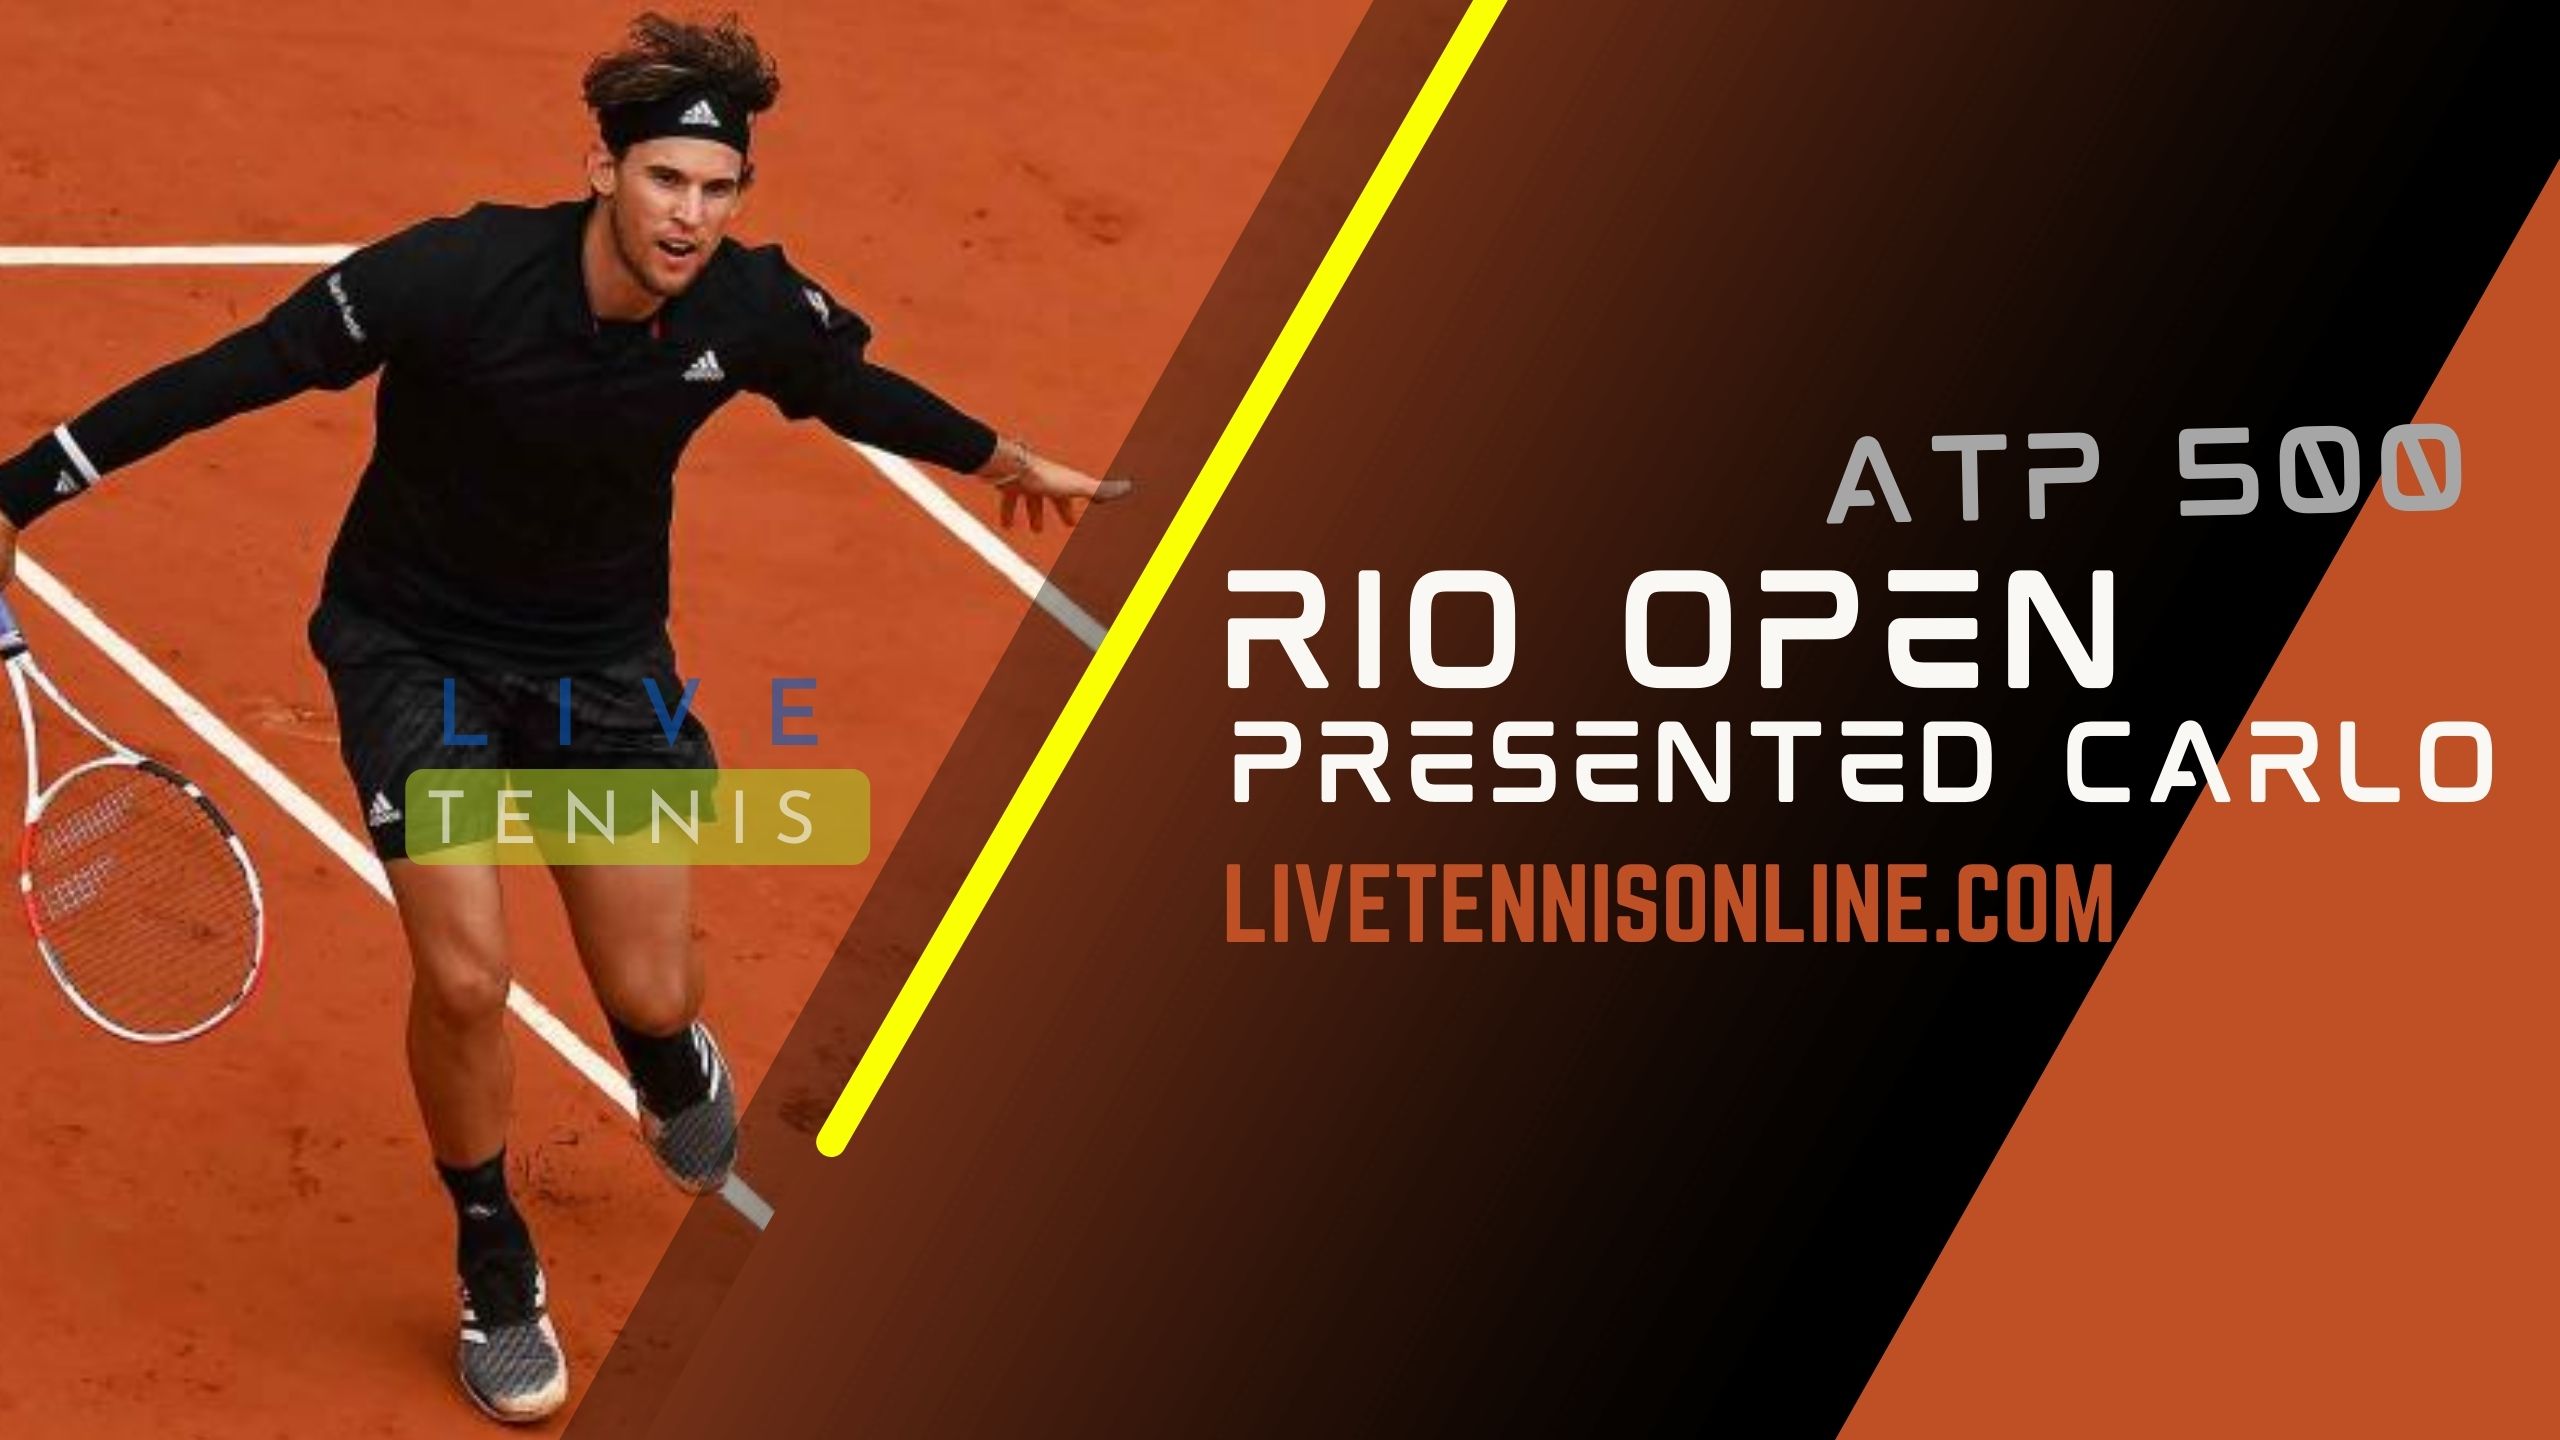 ATP Rio Open 2018 Live Streaming